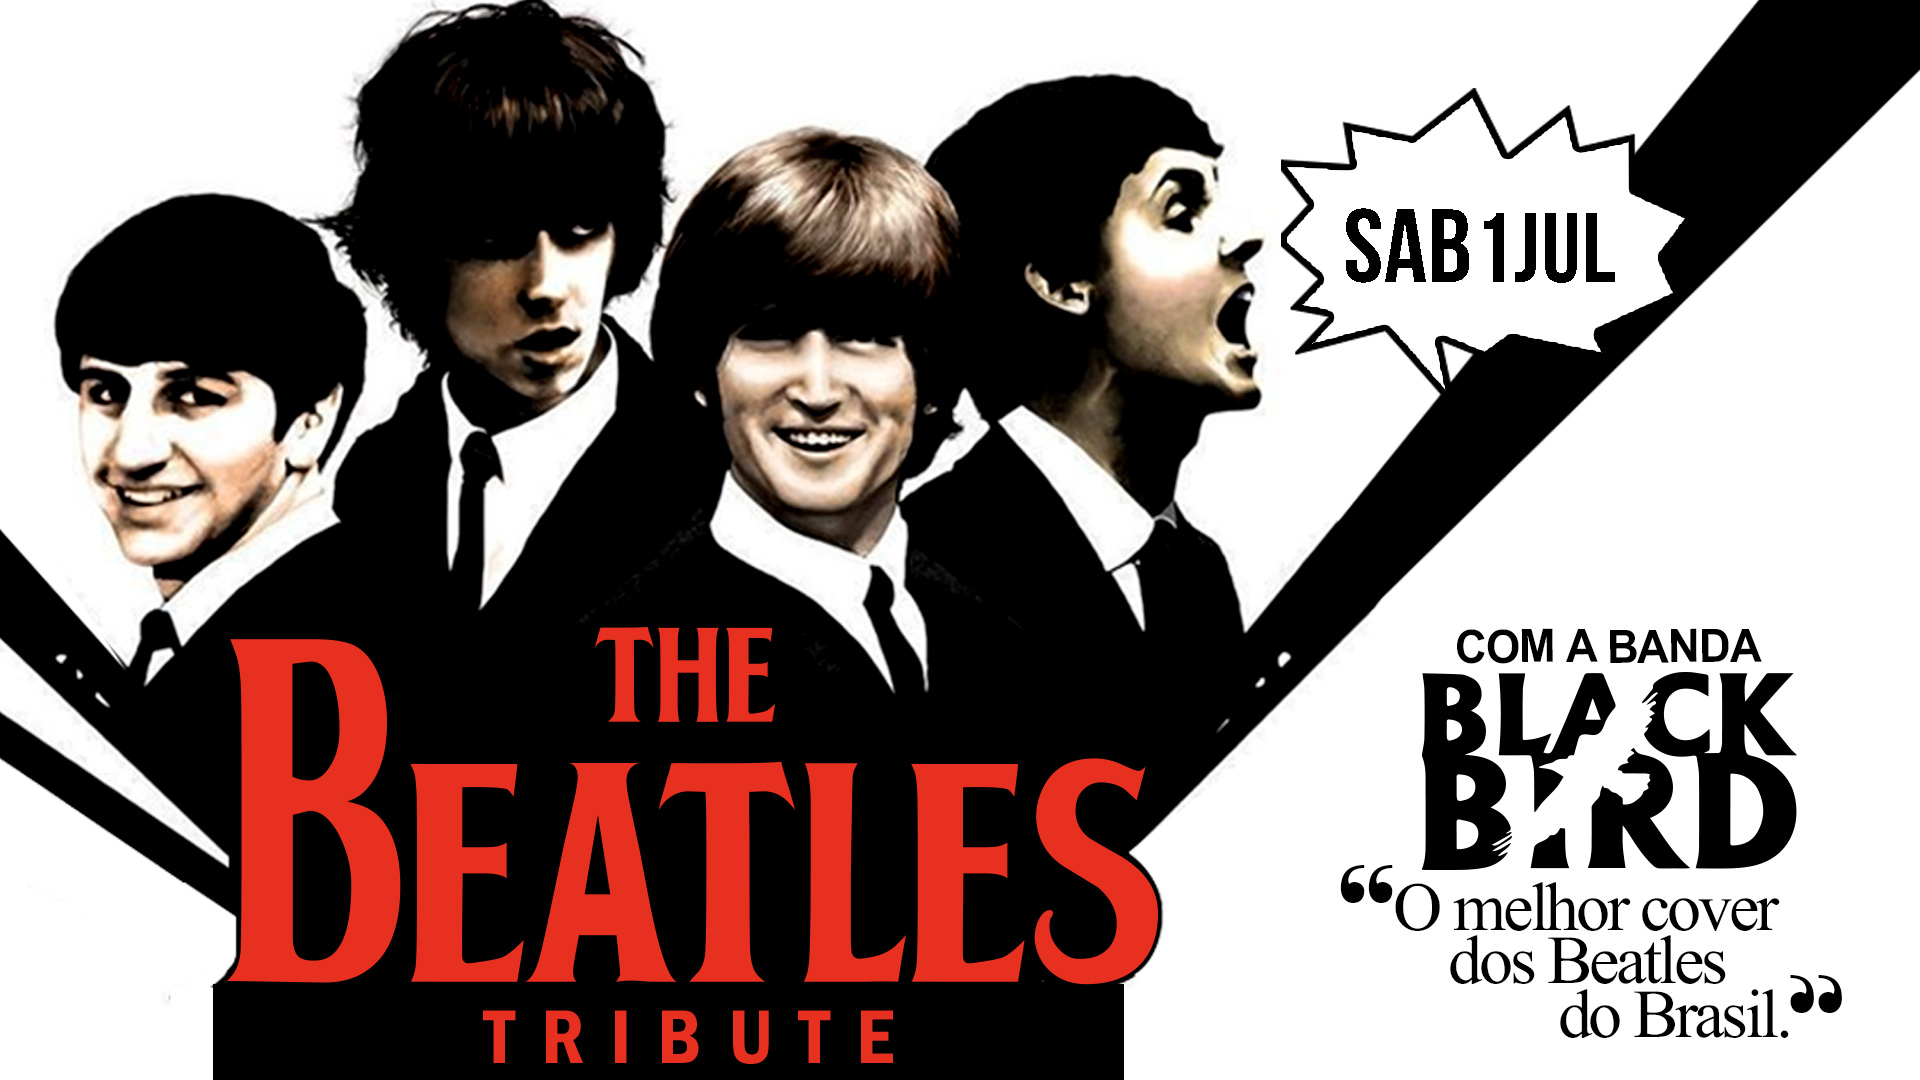 Sunday - The Beatles Tribute: Black Bird